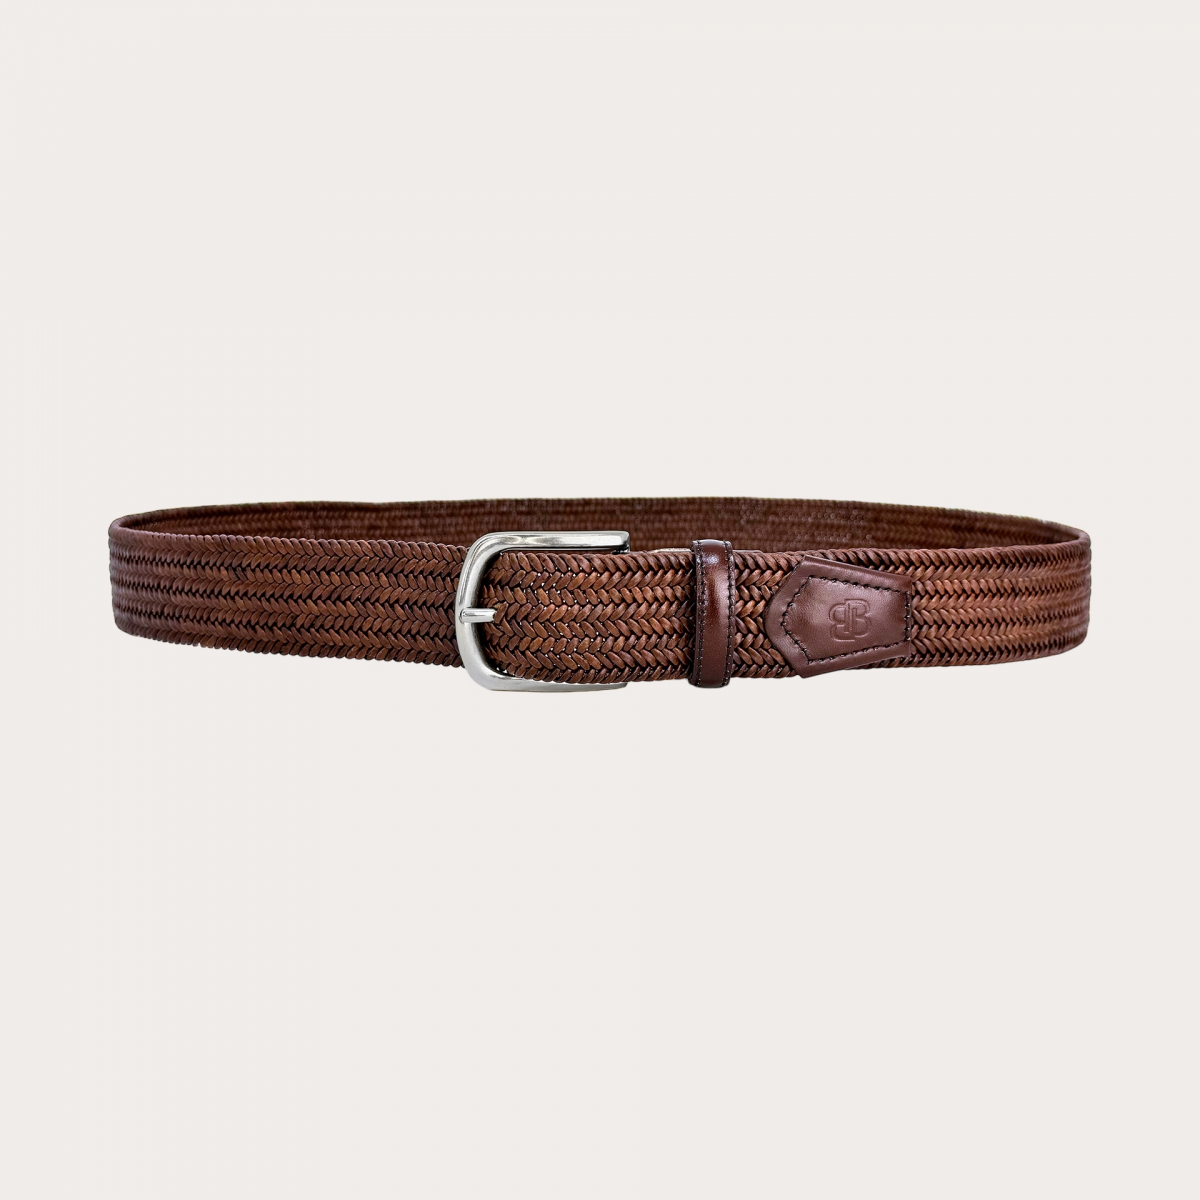 Elastic braided brown leather belt